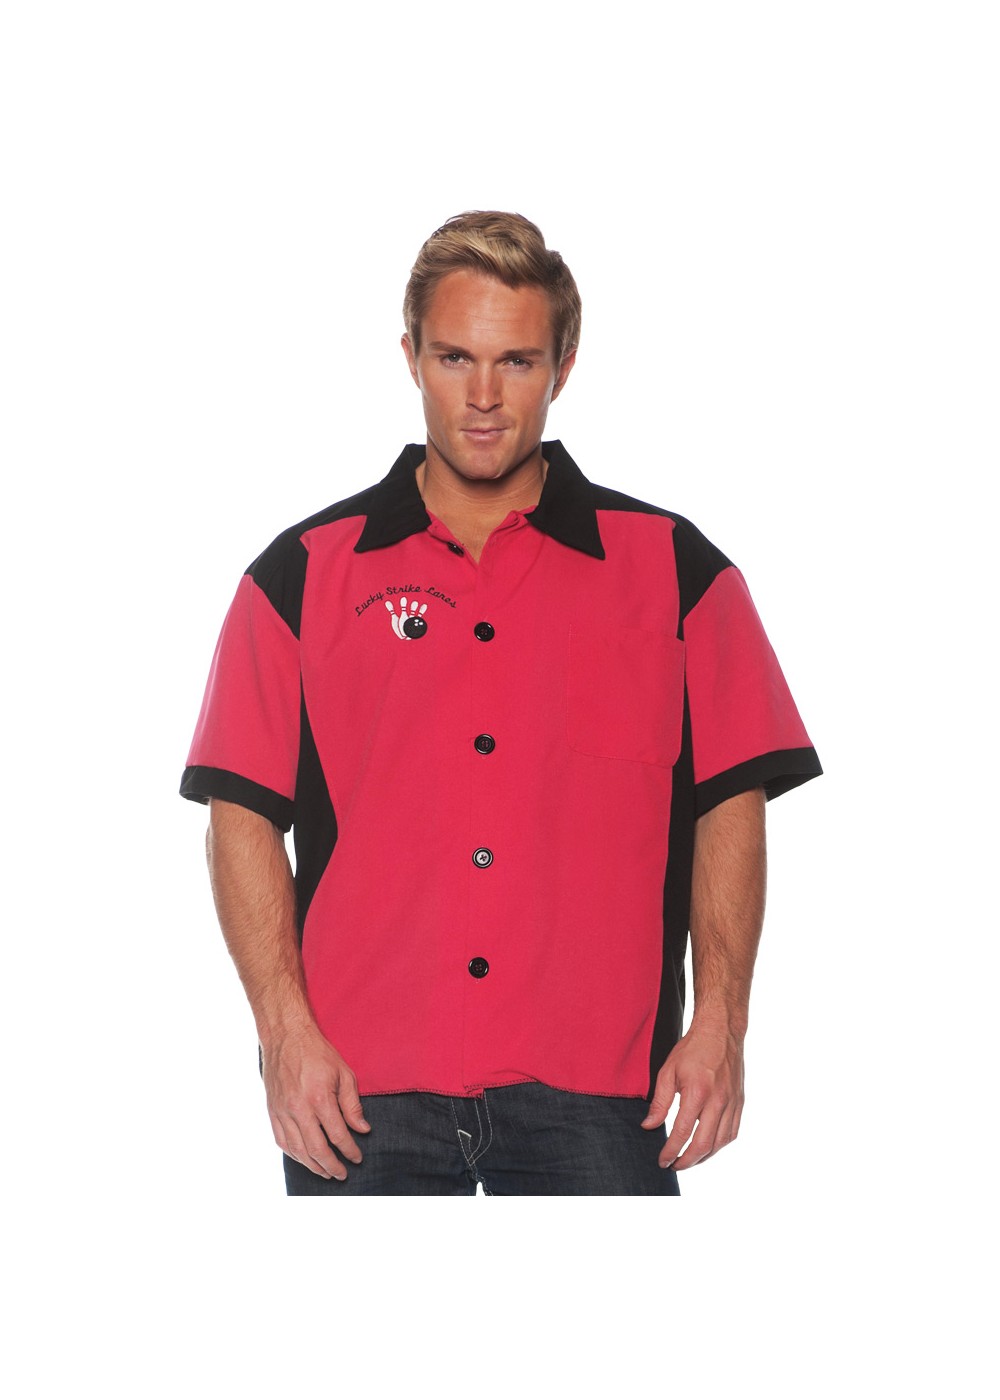 Mens Red Bowling Shirt